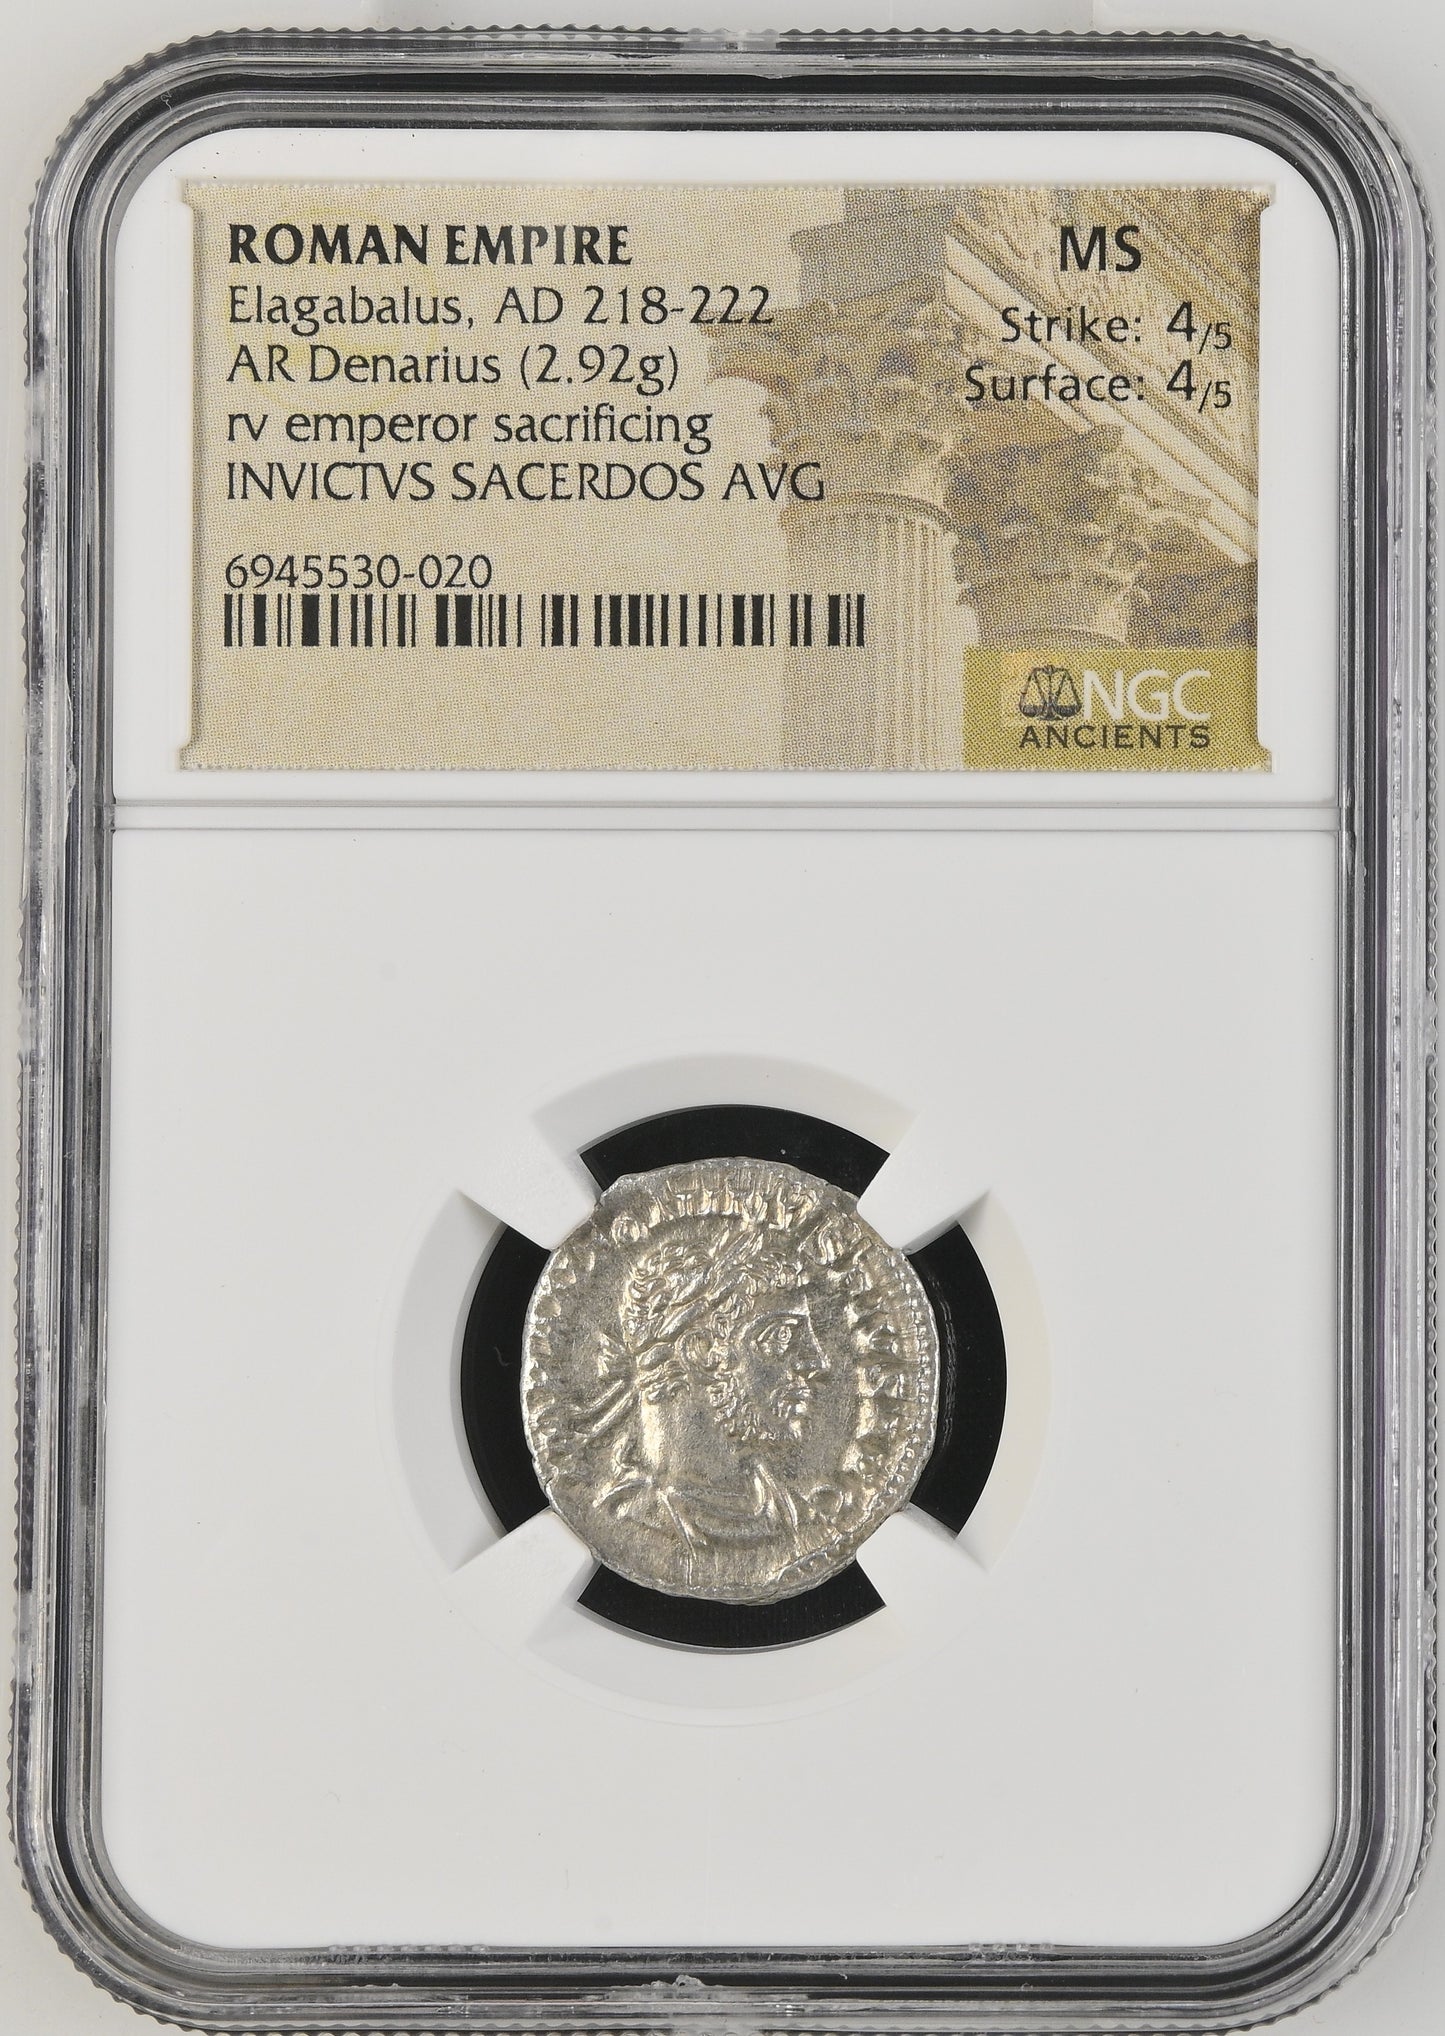 Roman Empire - Elagabalus - Silver Denarius - NGC MS - RIC:88